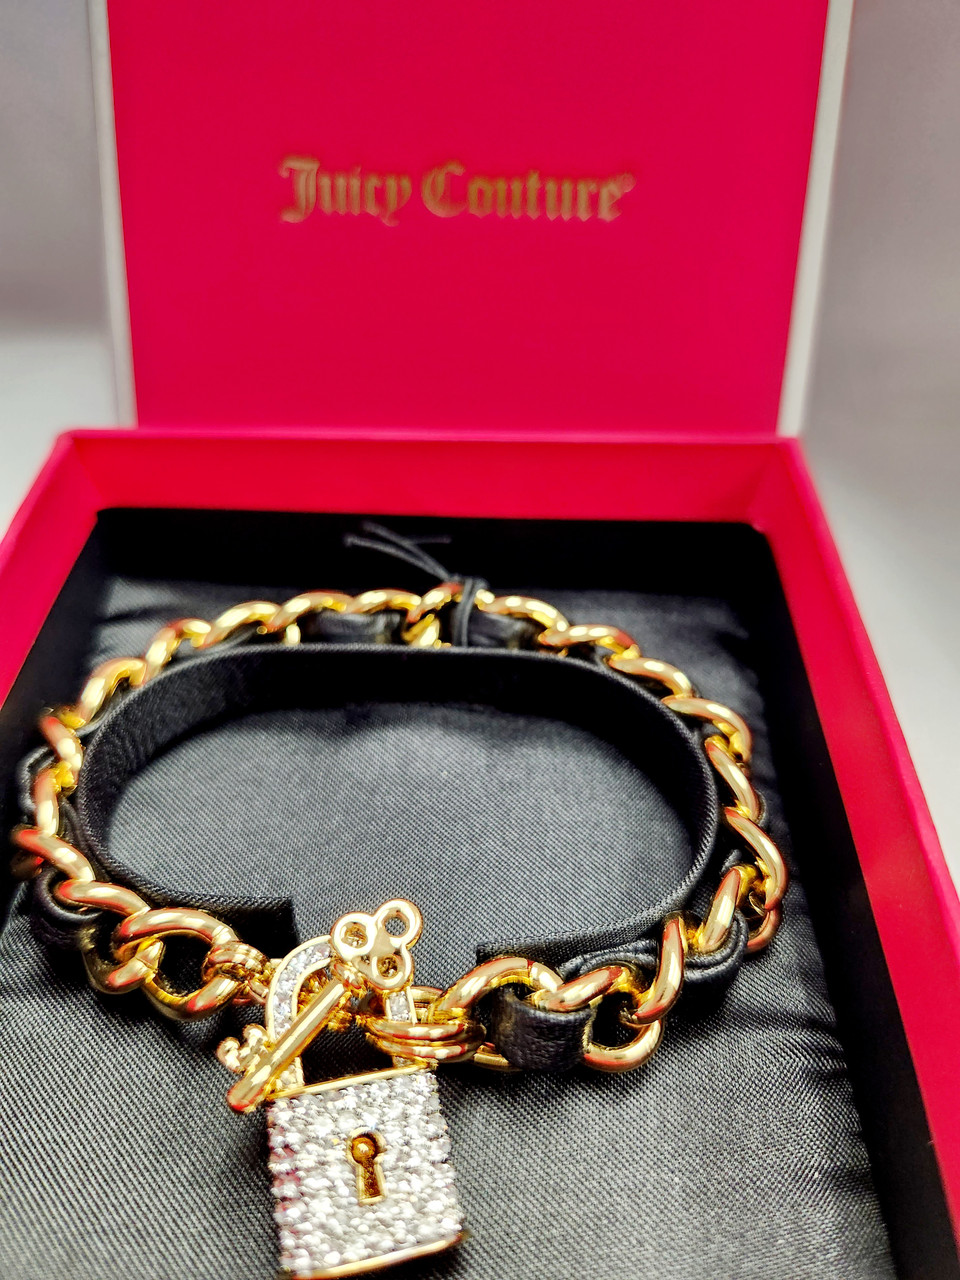 Crystal bracelet Juicy Couture Pink in Crystal - 34374039